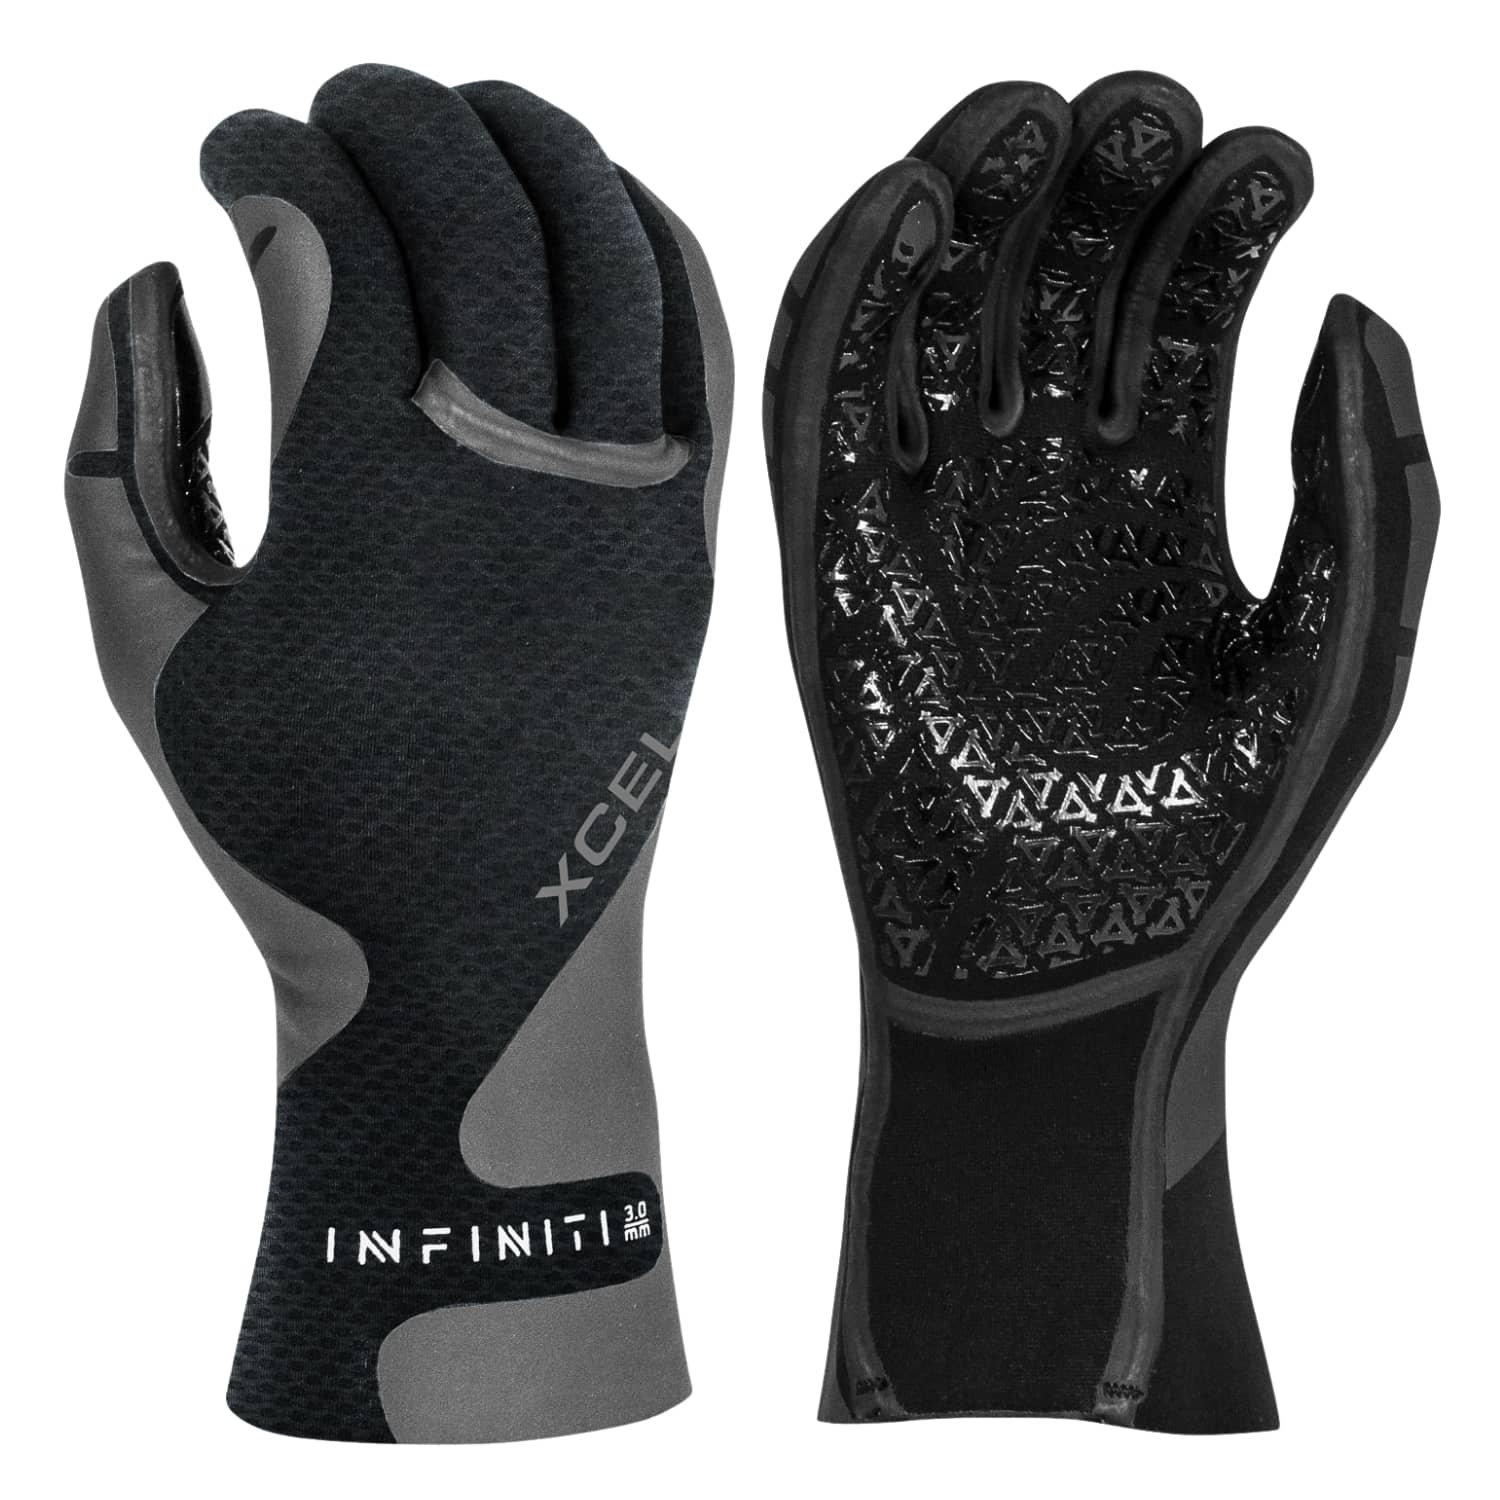 Xcel 1.5mm Infiniti 5-Finger Wetsuit Glove - Black - 5 Finger Wetsuit Gloves by Xcel